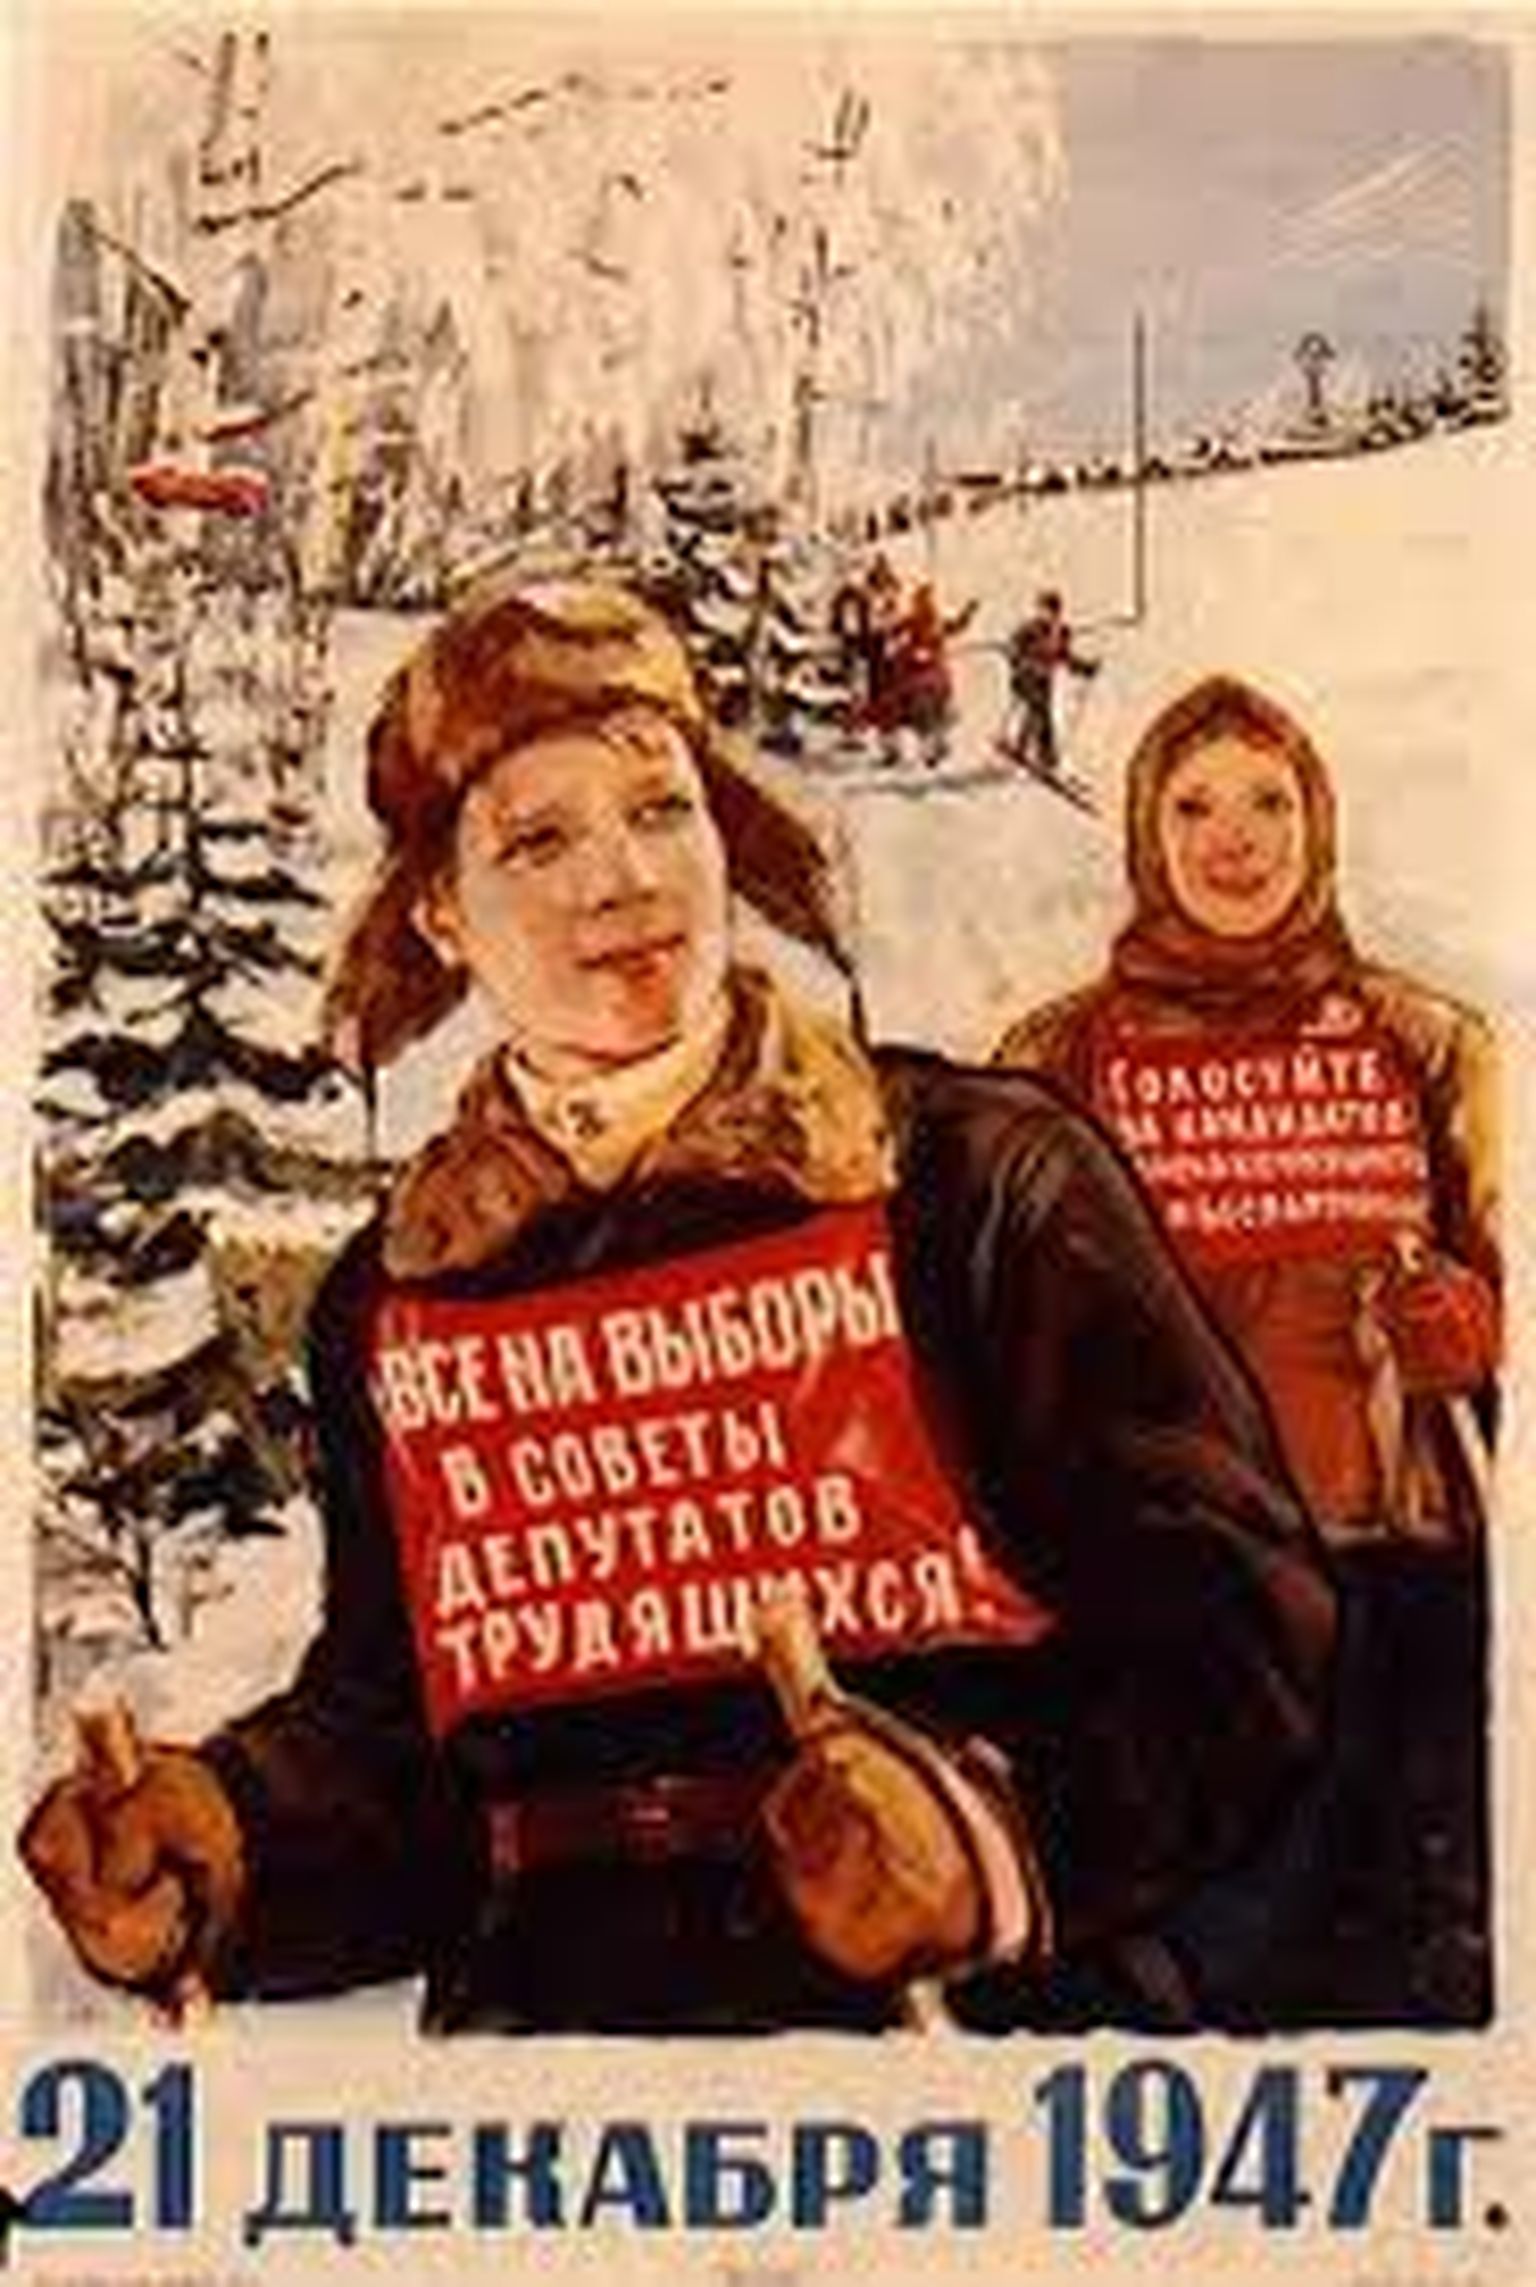 Nõukogude-aegne propagandaplakat